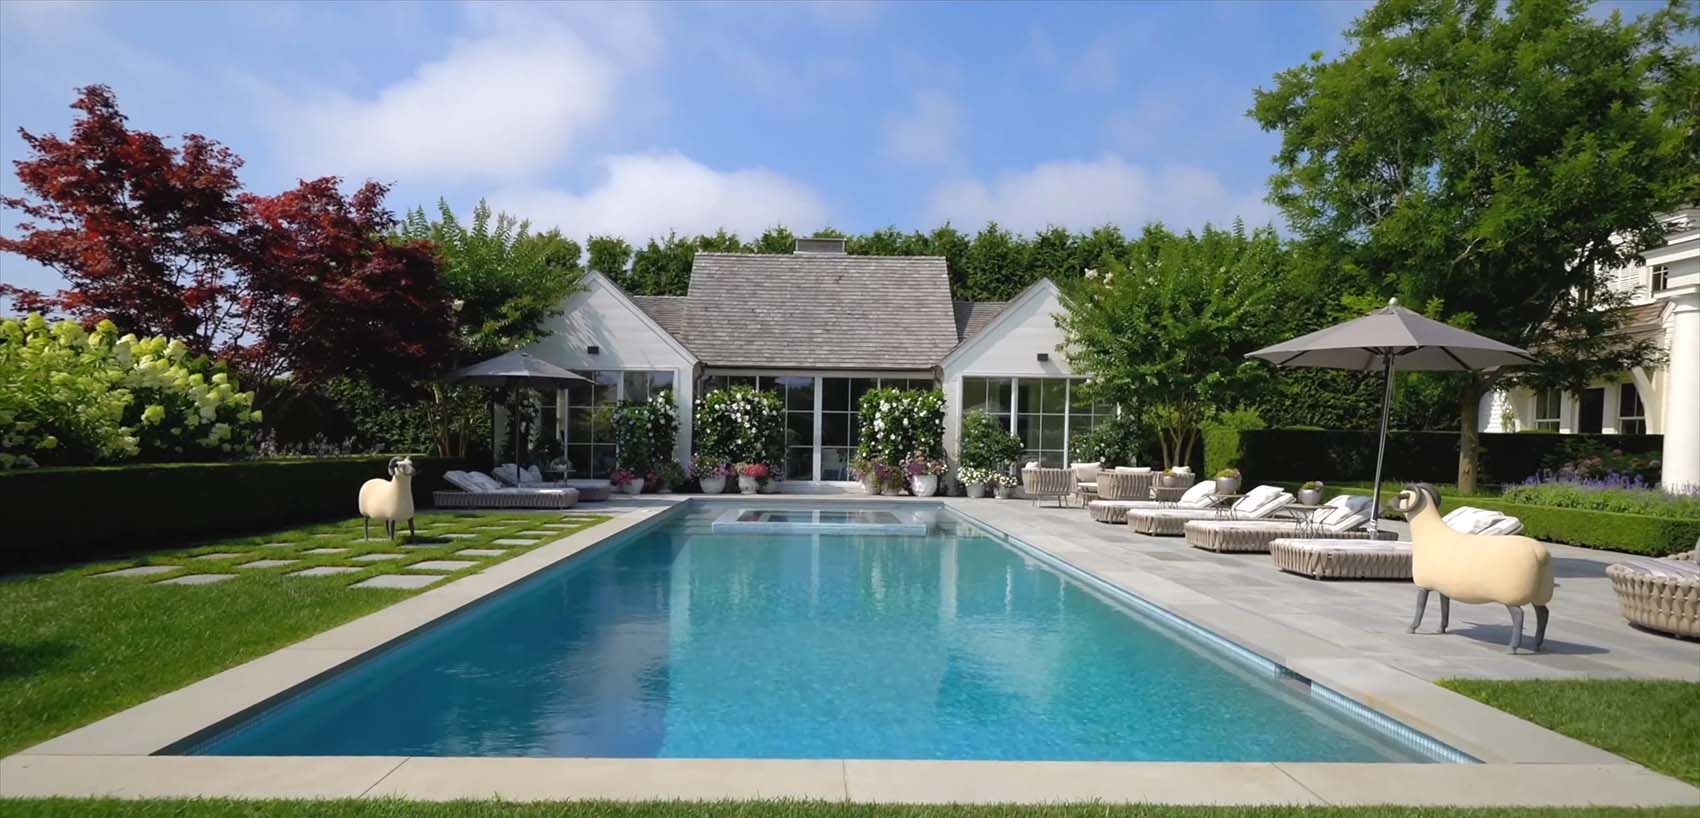 Hamptons style pool house design 